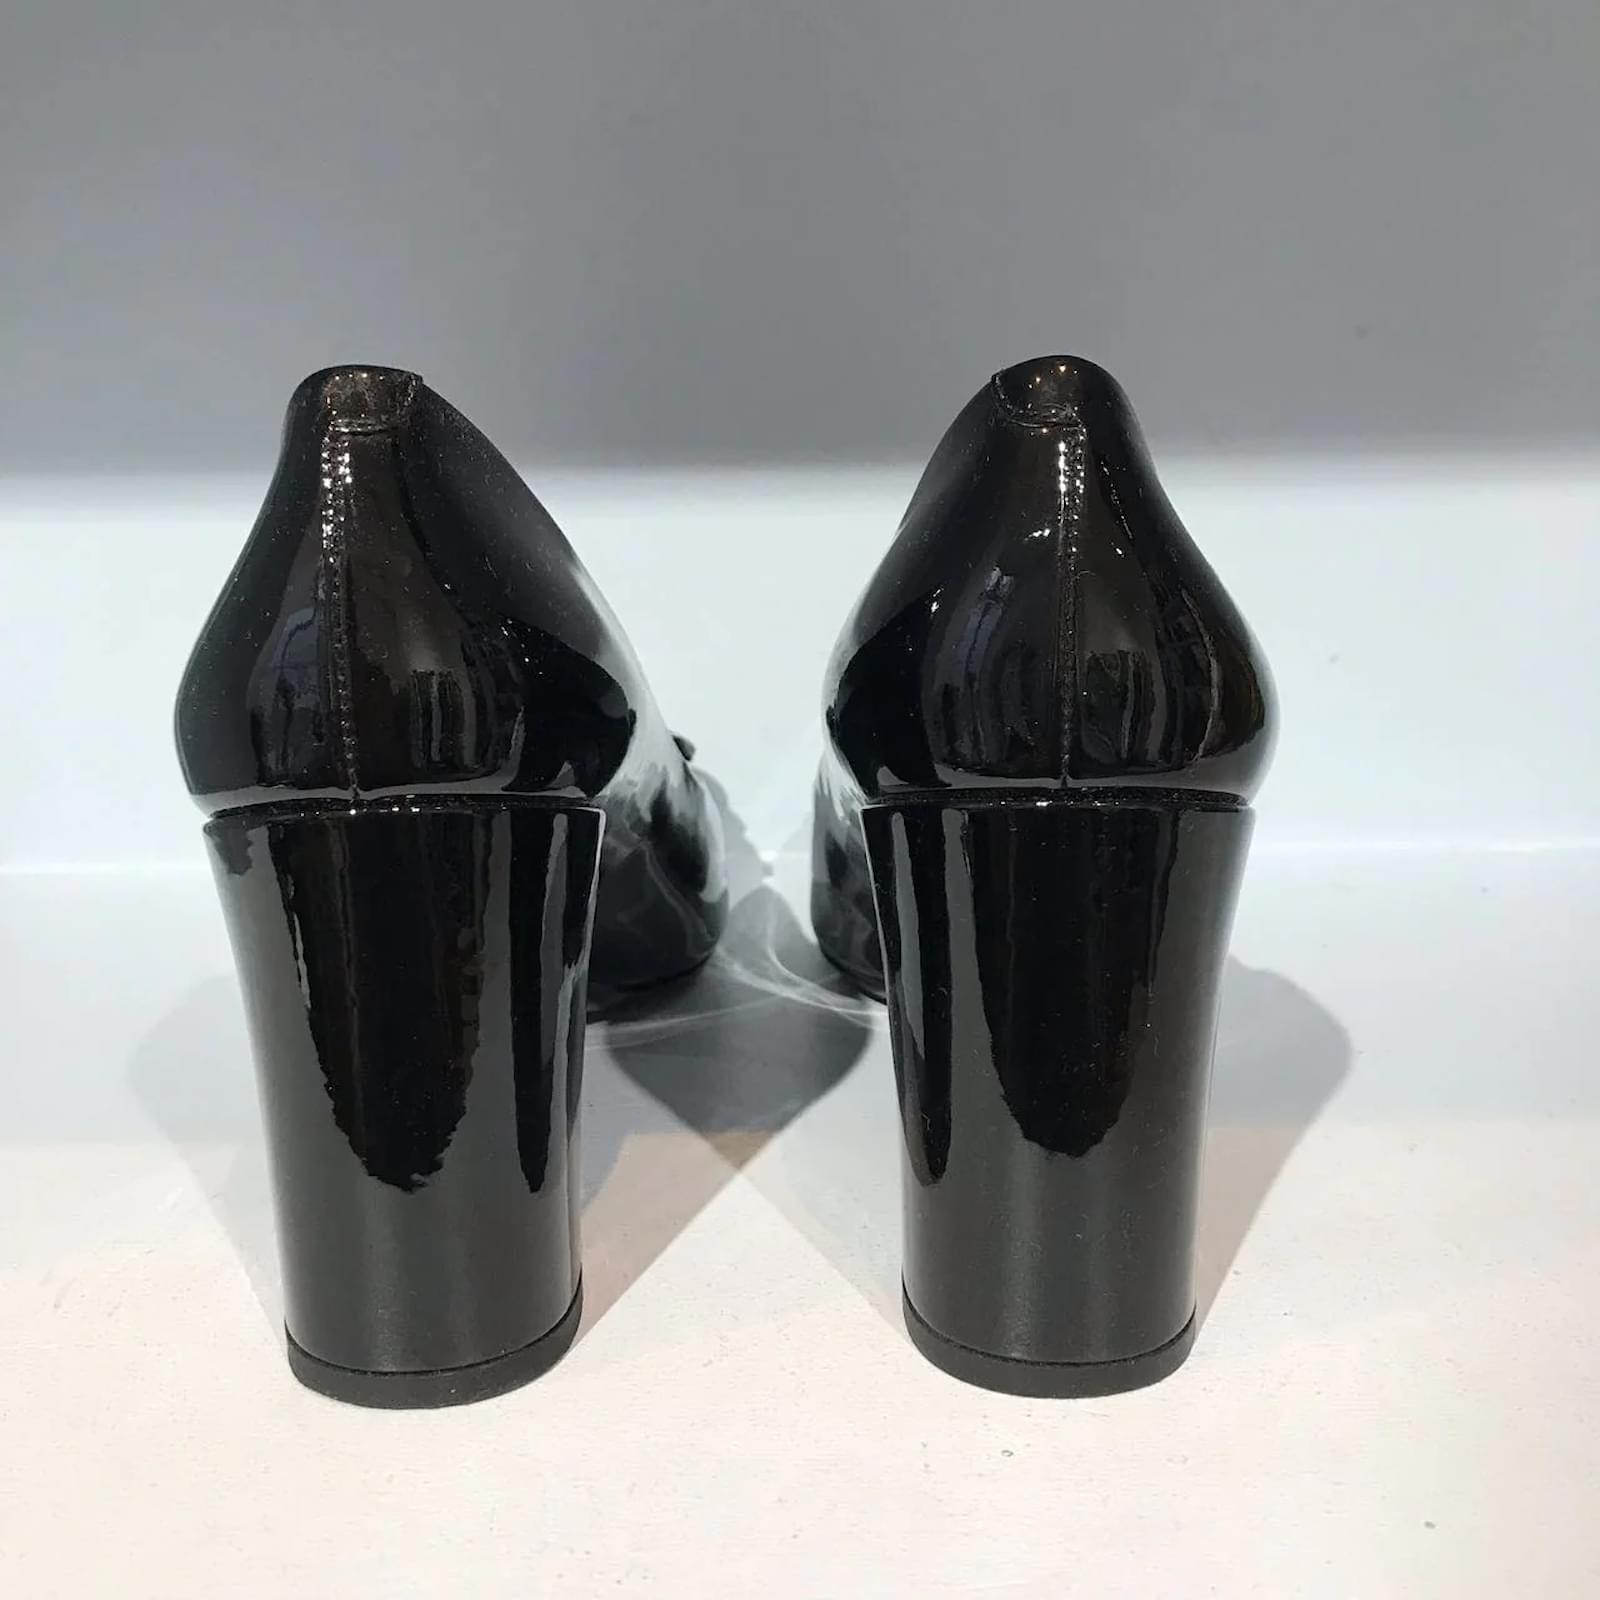 Patent leather heels Louis Vuitton Black size 35.5 EU in Patent